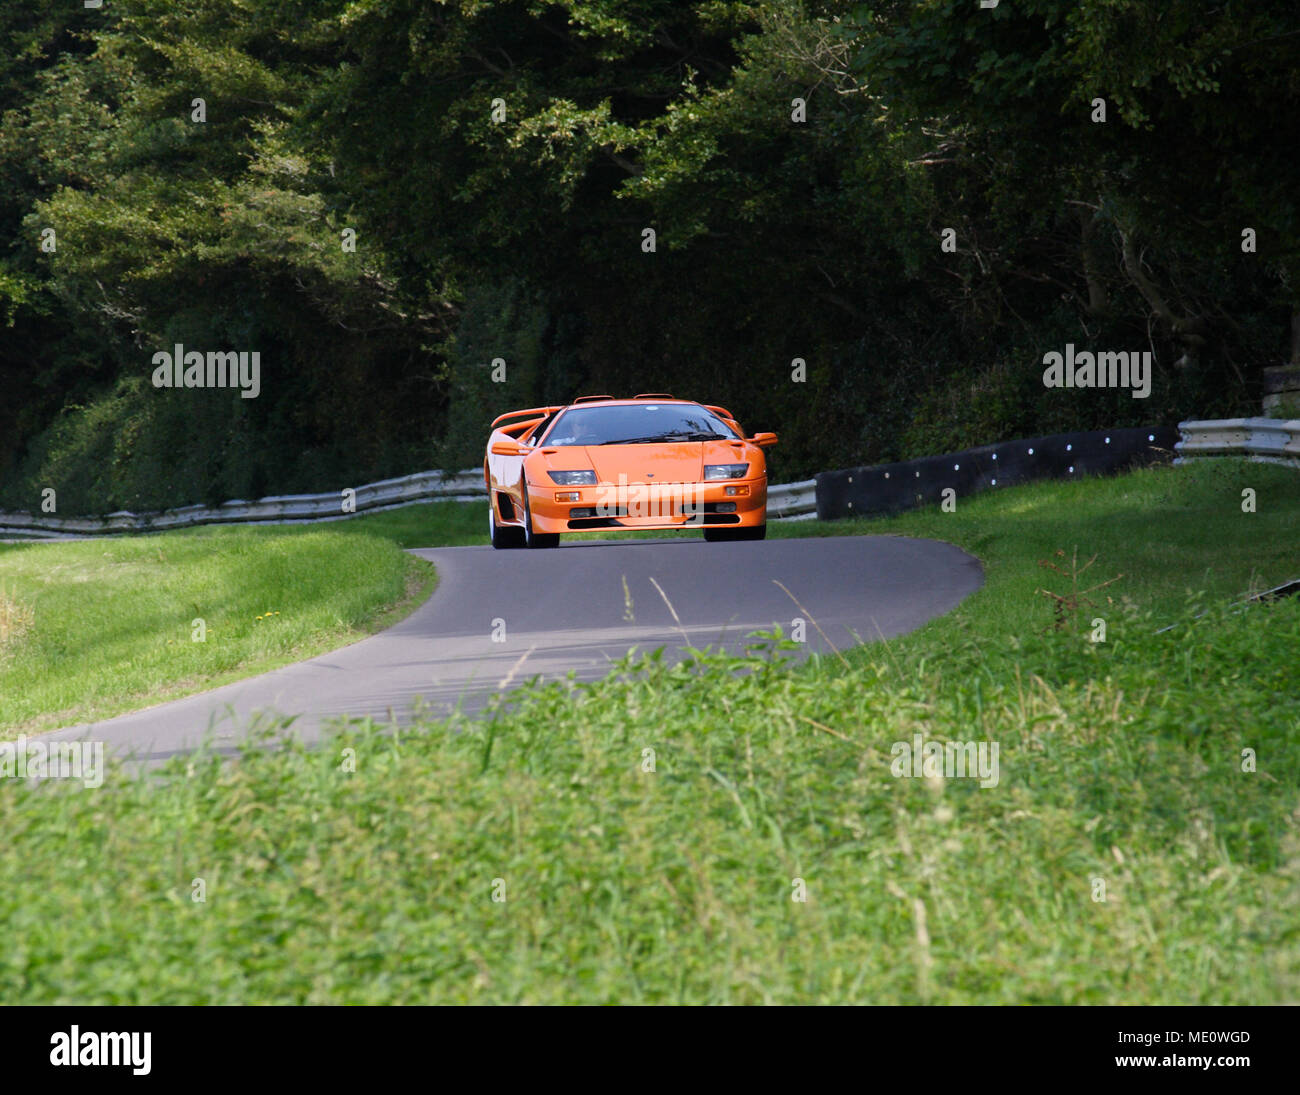 Orange Lamborghini Diablo GT '90s (1990s) V12 supercar driving fast and racing on track. Stock Photo